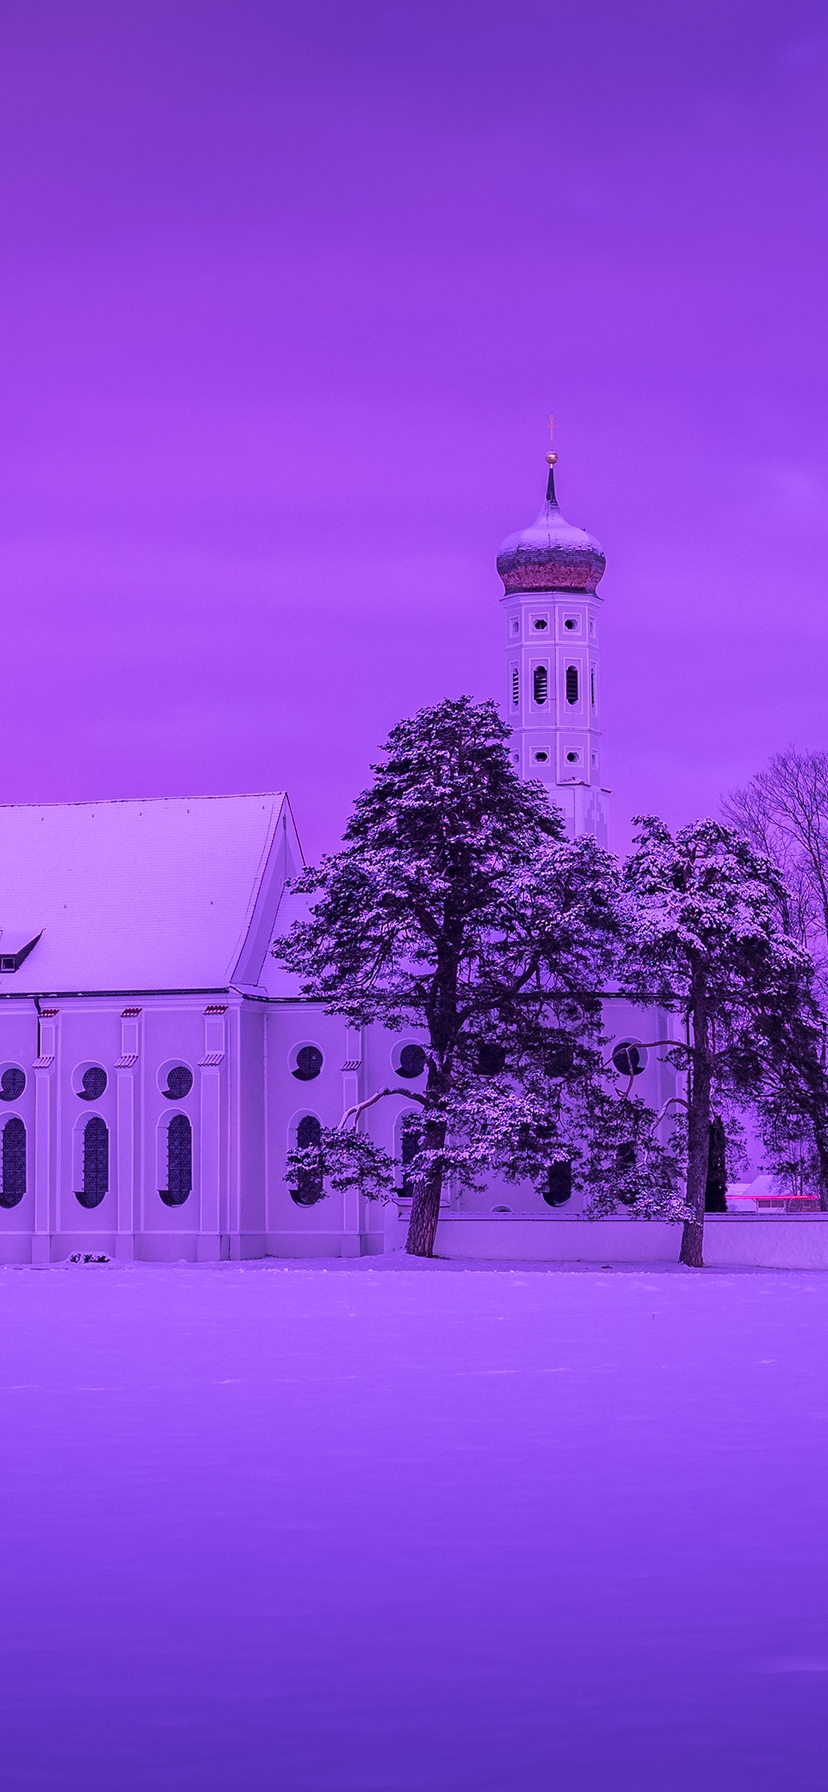 Image: Chapel, Winter, Sunset